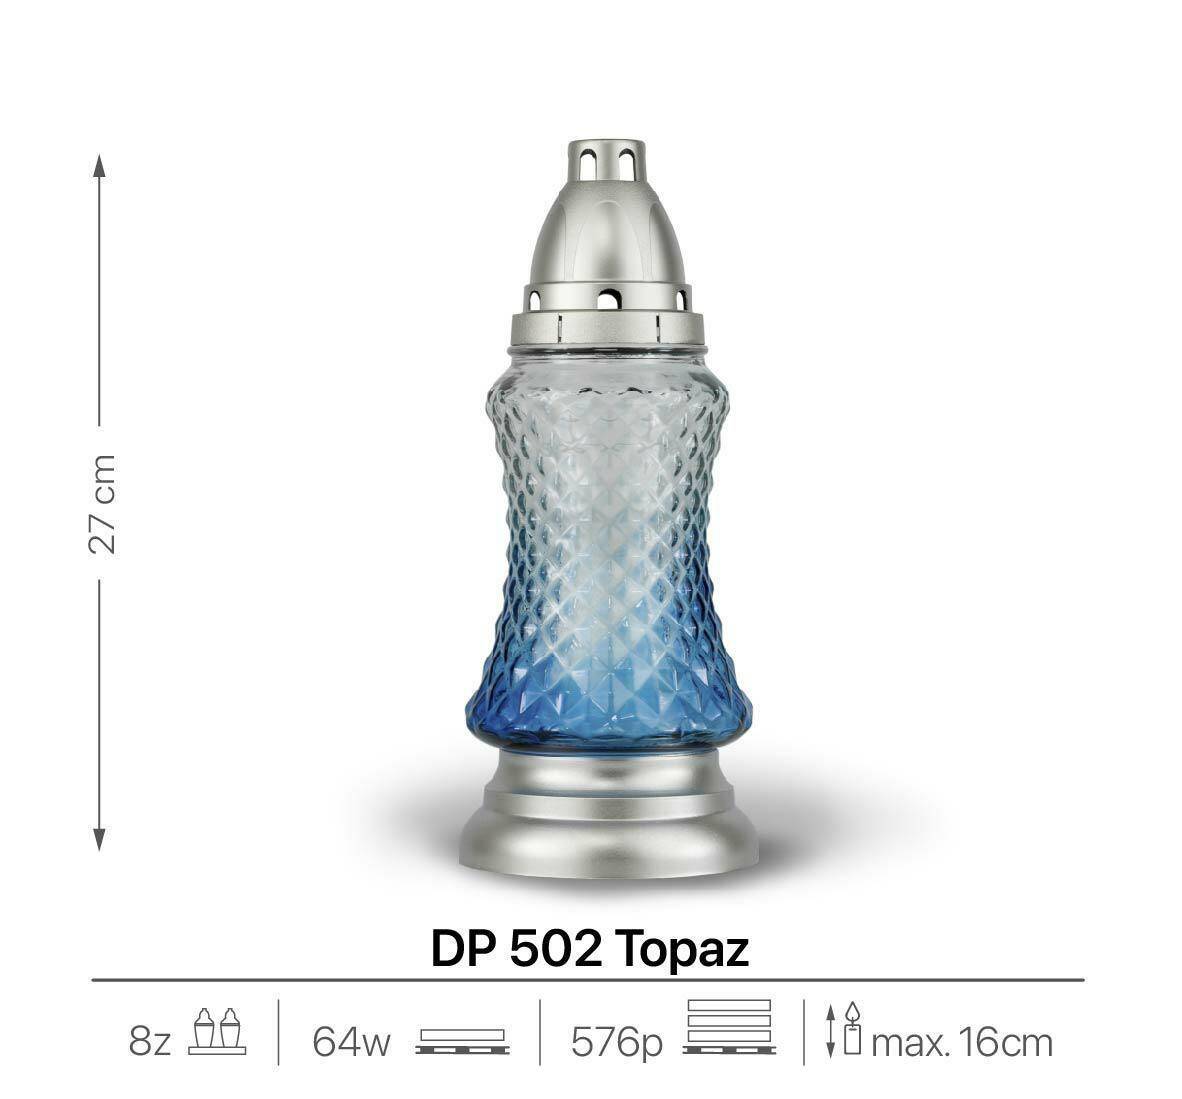 DP 502 Topaz